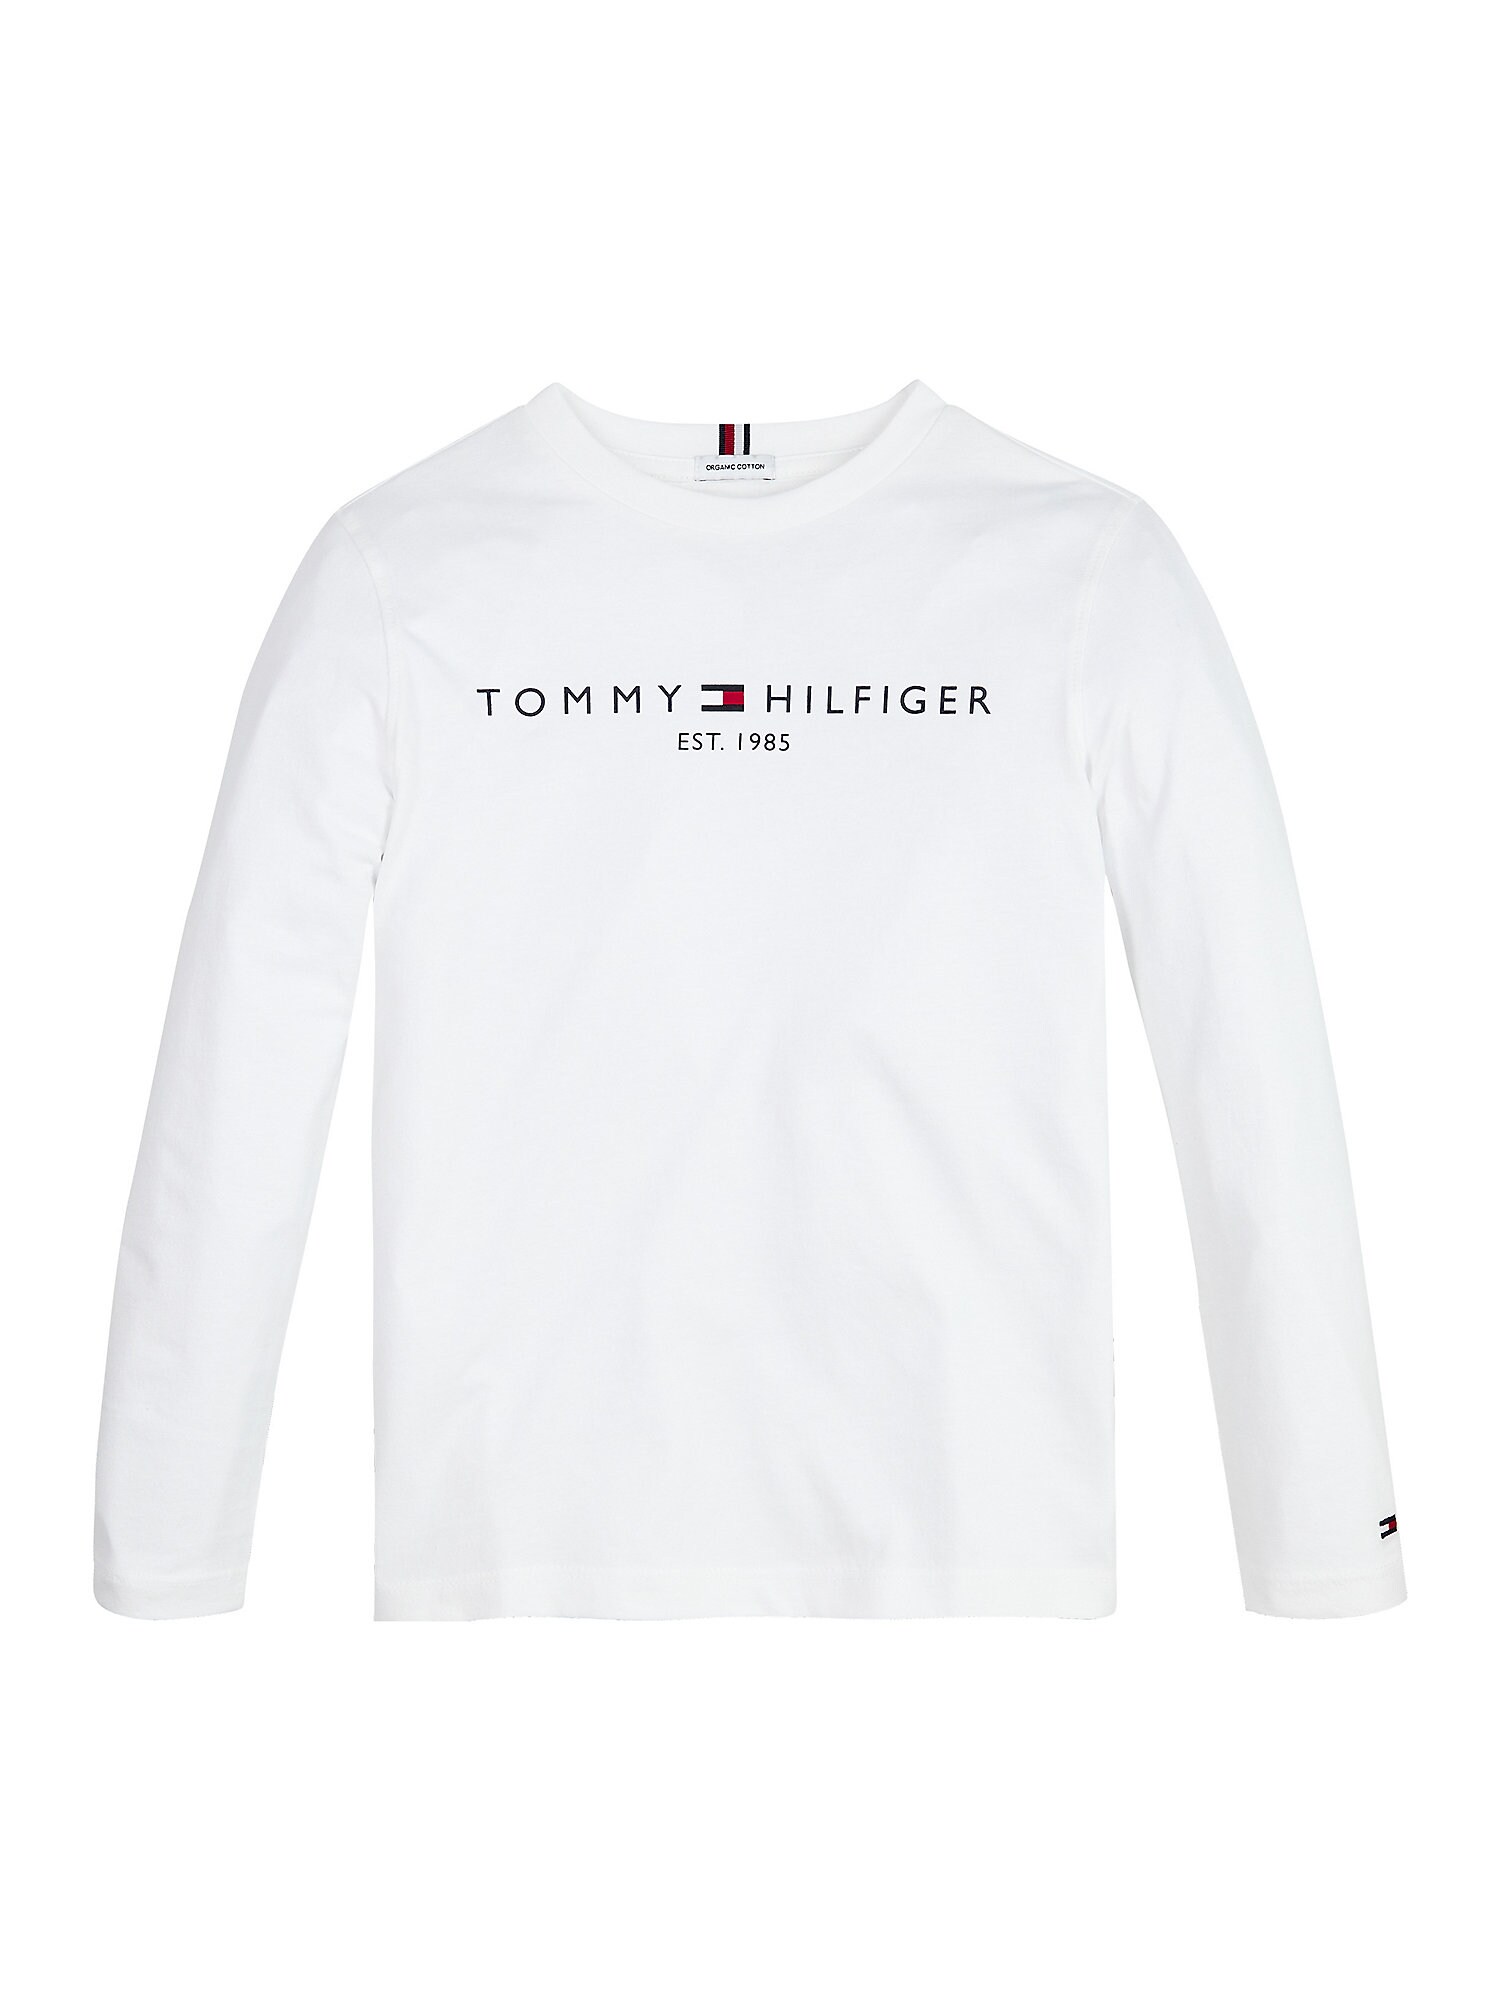 Tommy Hilfiger TOMMY HILFIGER Shirt marine / rot / weiß